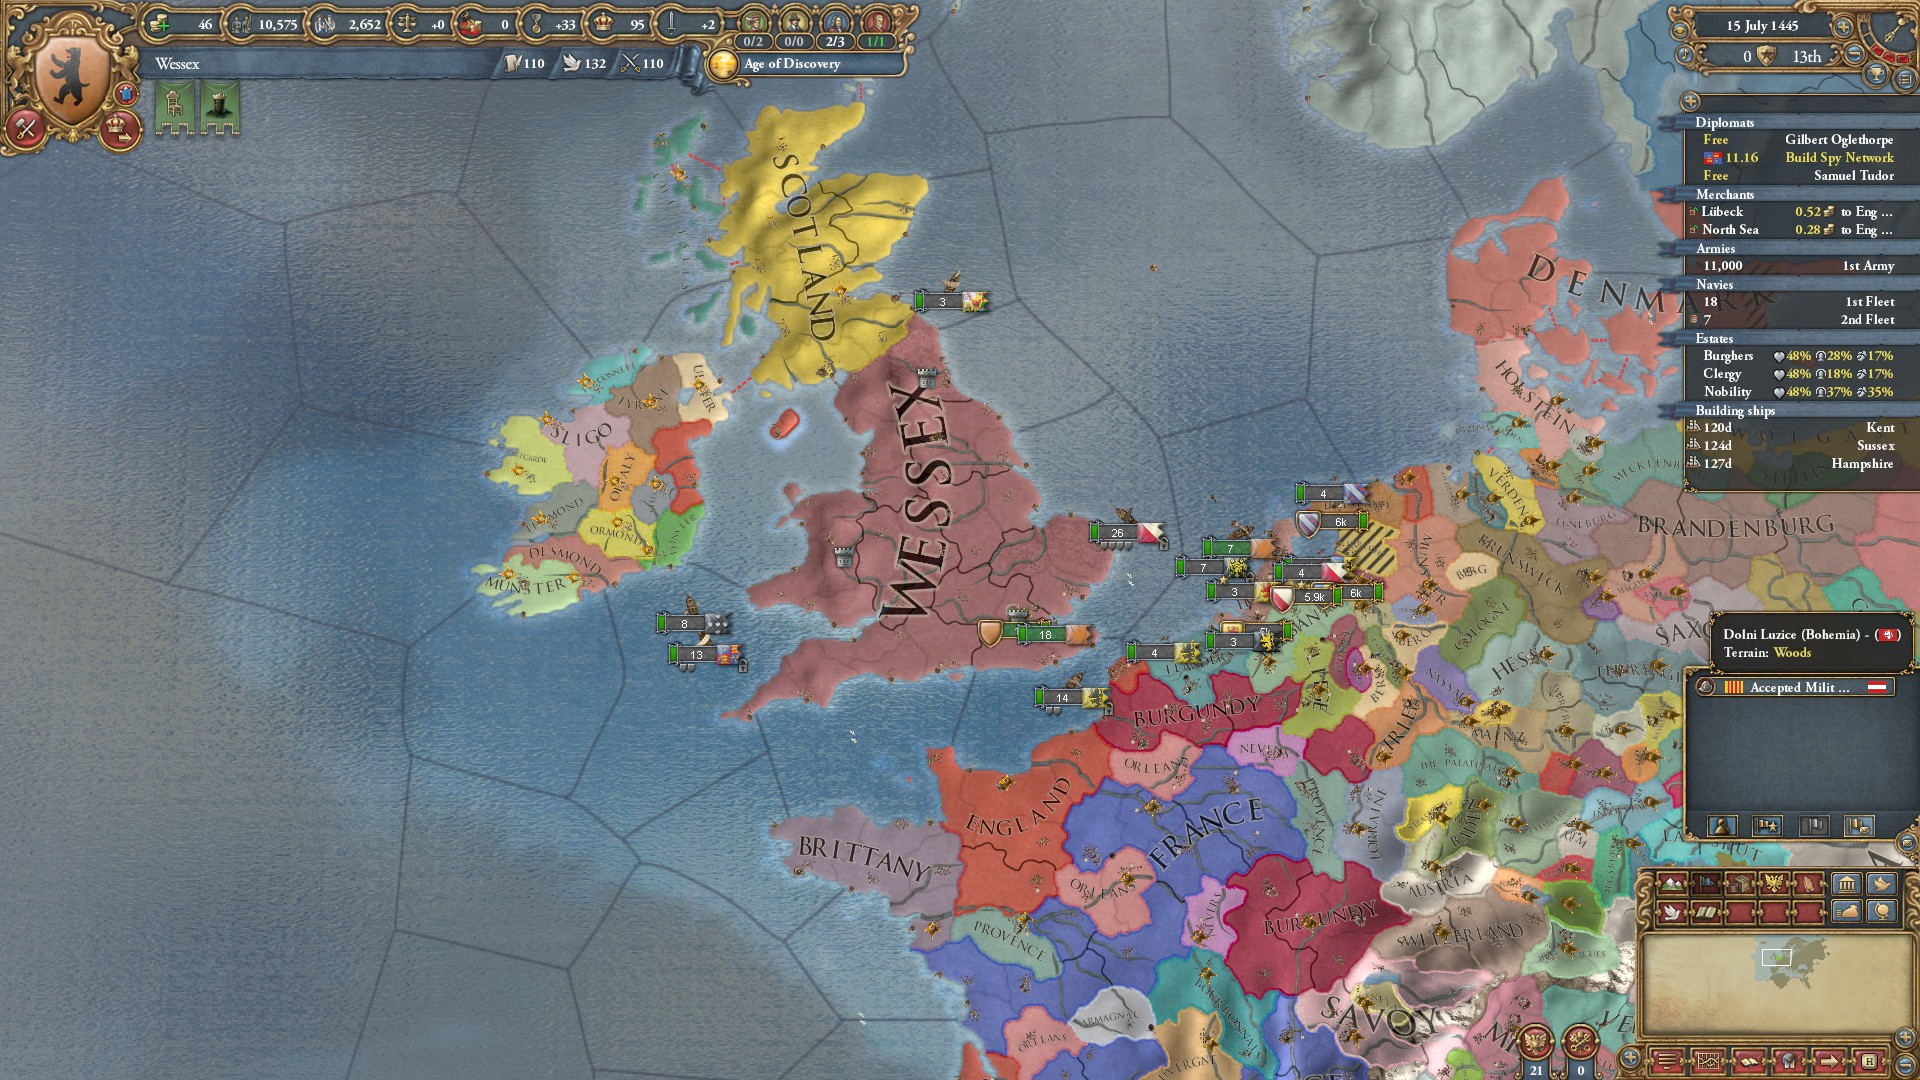 The best Europa Universalis 4 achievements - EU4 screenshot showing the in game map of Britain